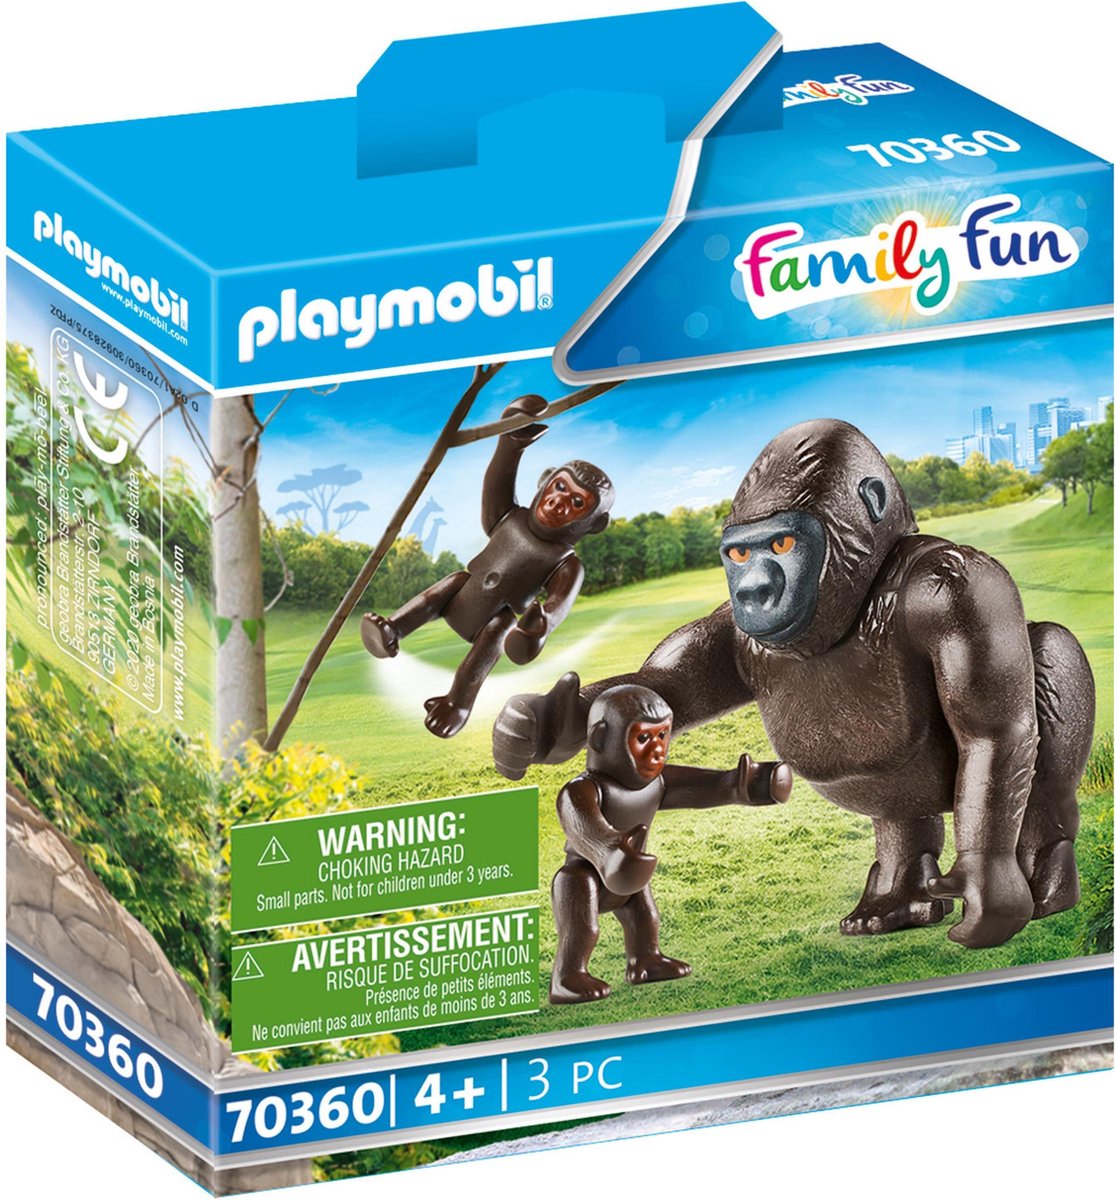 PLAYMOBIL Family Fun Gorilla met babies - 70360 - PLAYMOBIL